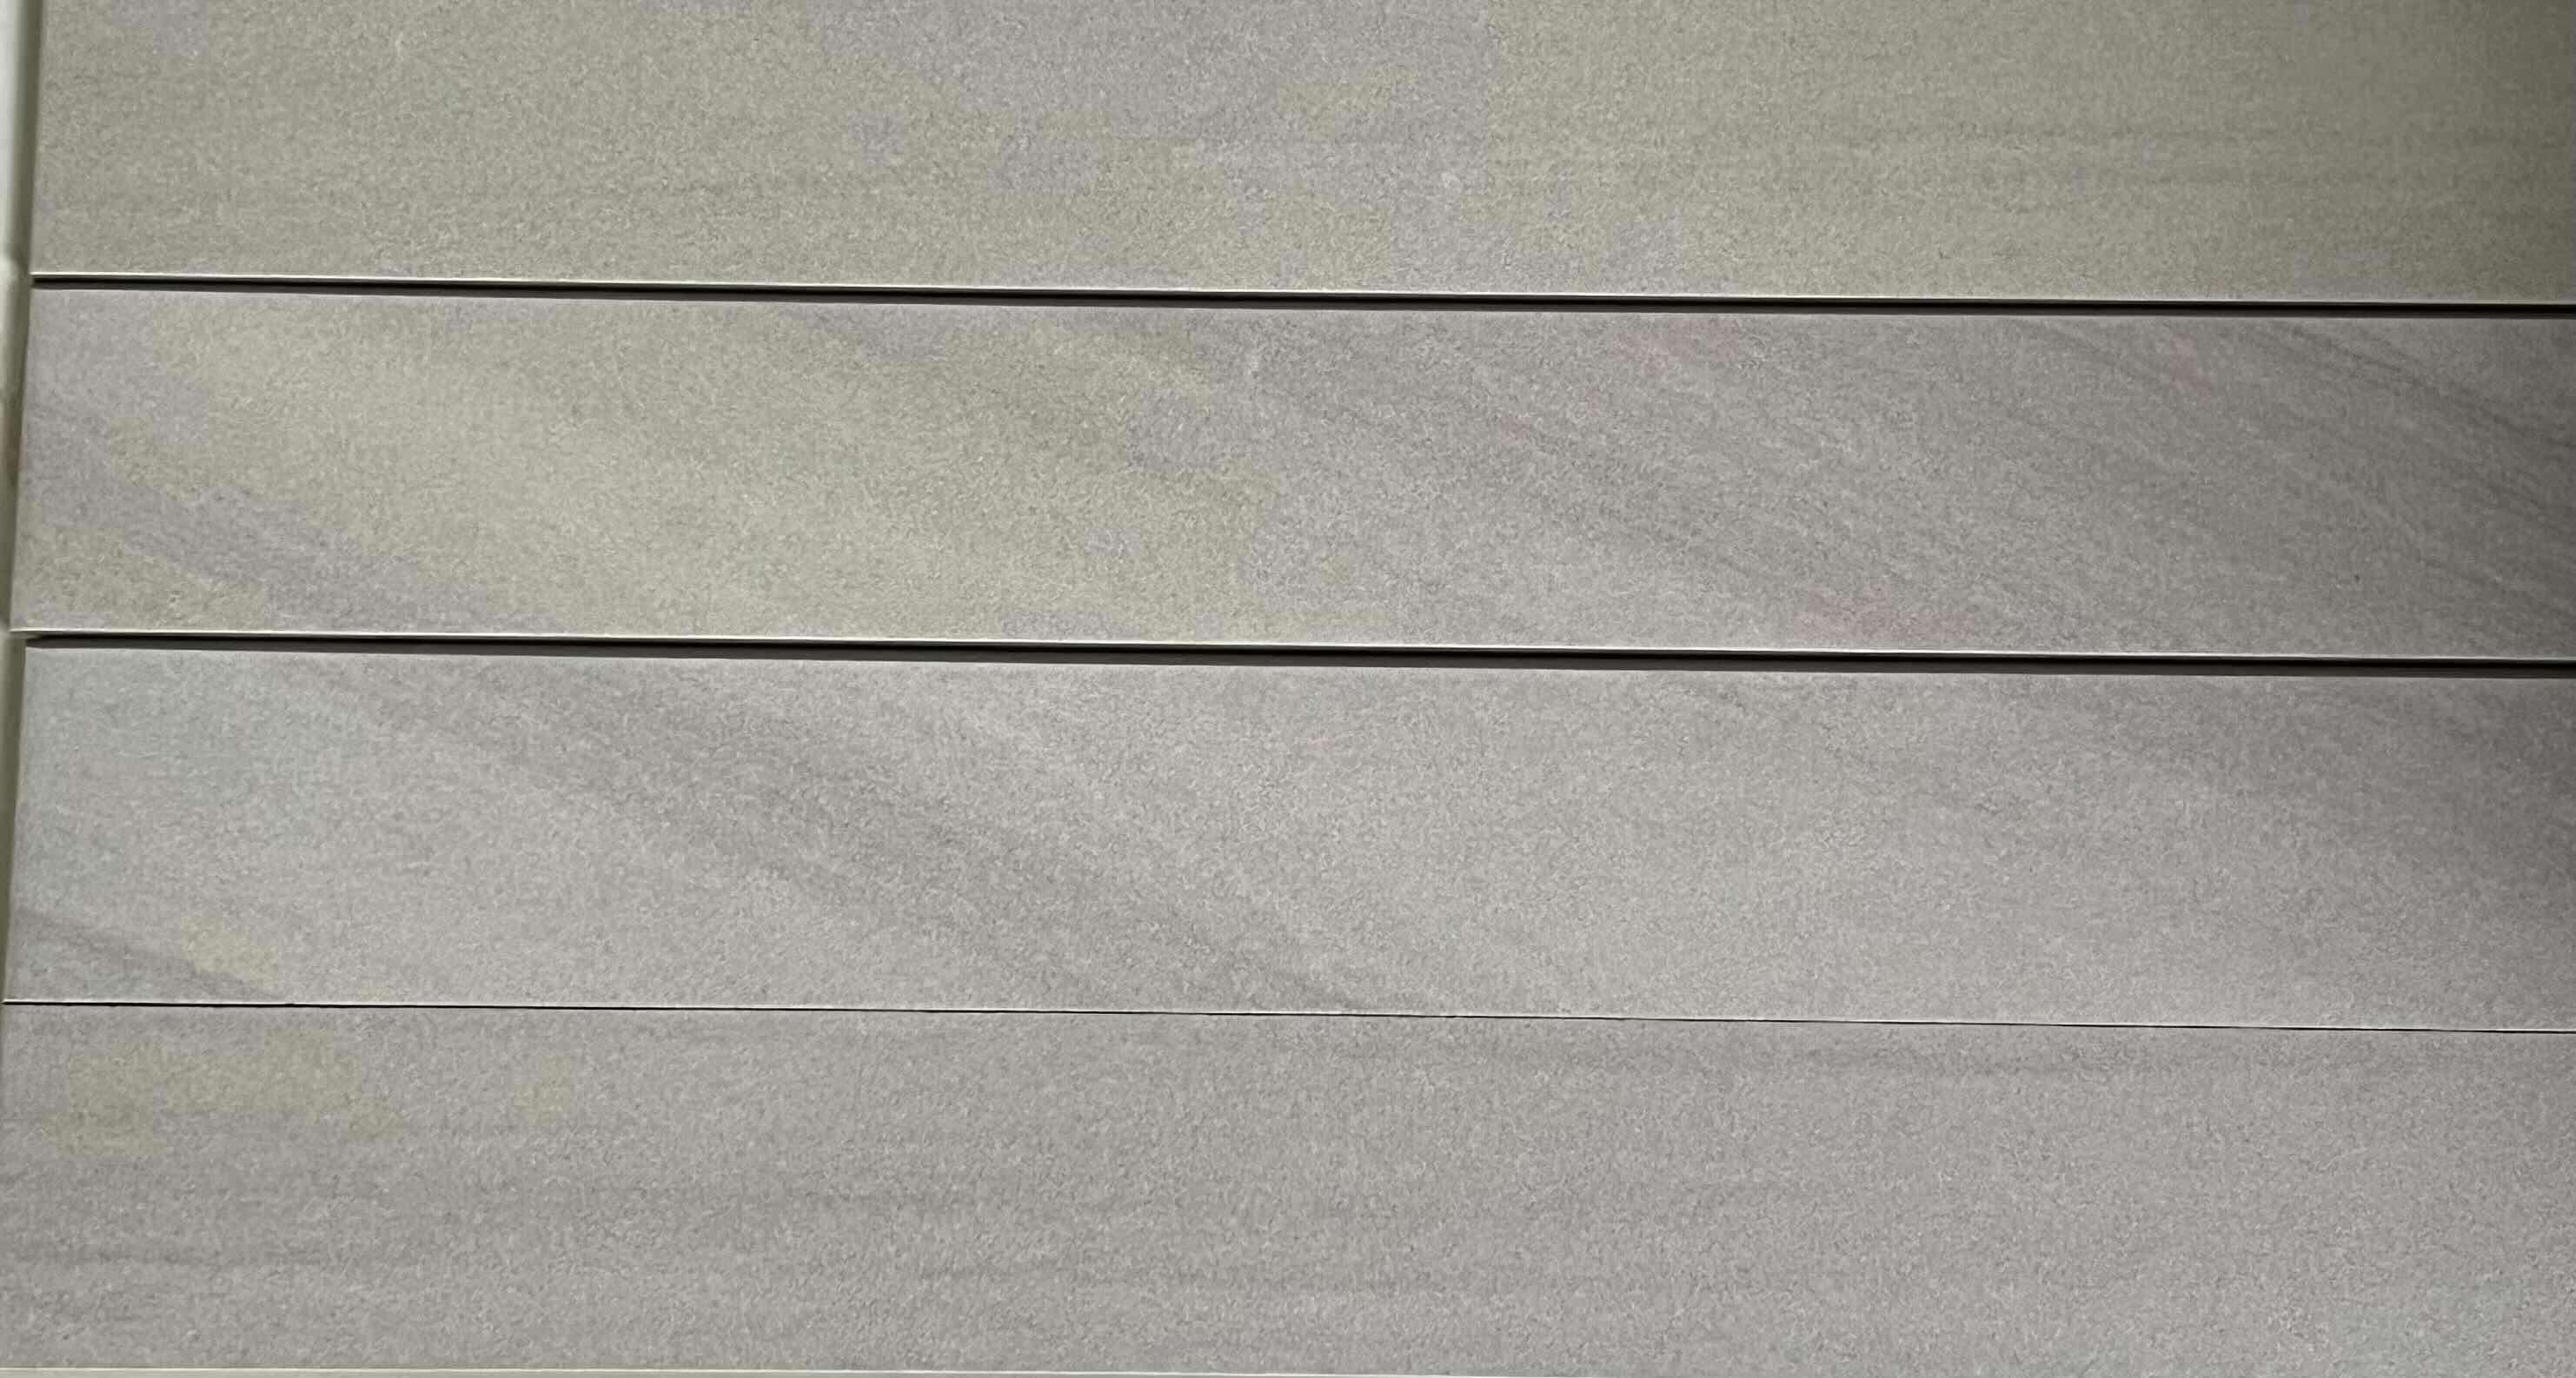 Photo 1 of EMSER TILE SABLE SERIES GRIS GRAY FINISH TILE 3” X 24” (4.52sqft PER CASE/53CASES APPROX 239.56sqft TOTAL)